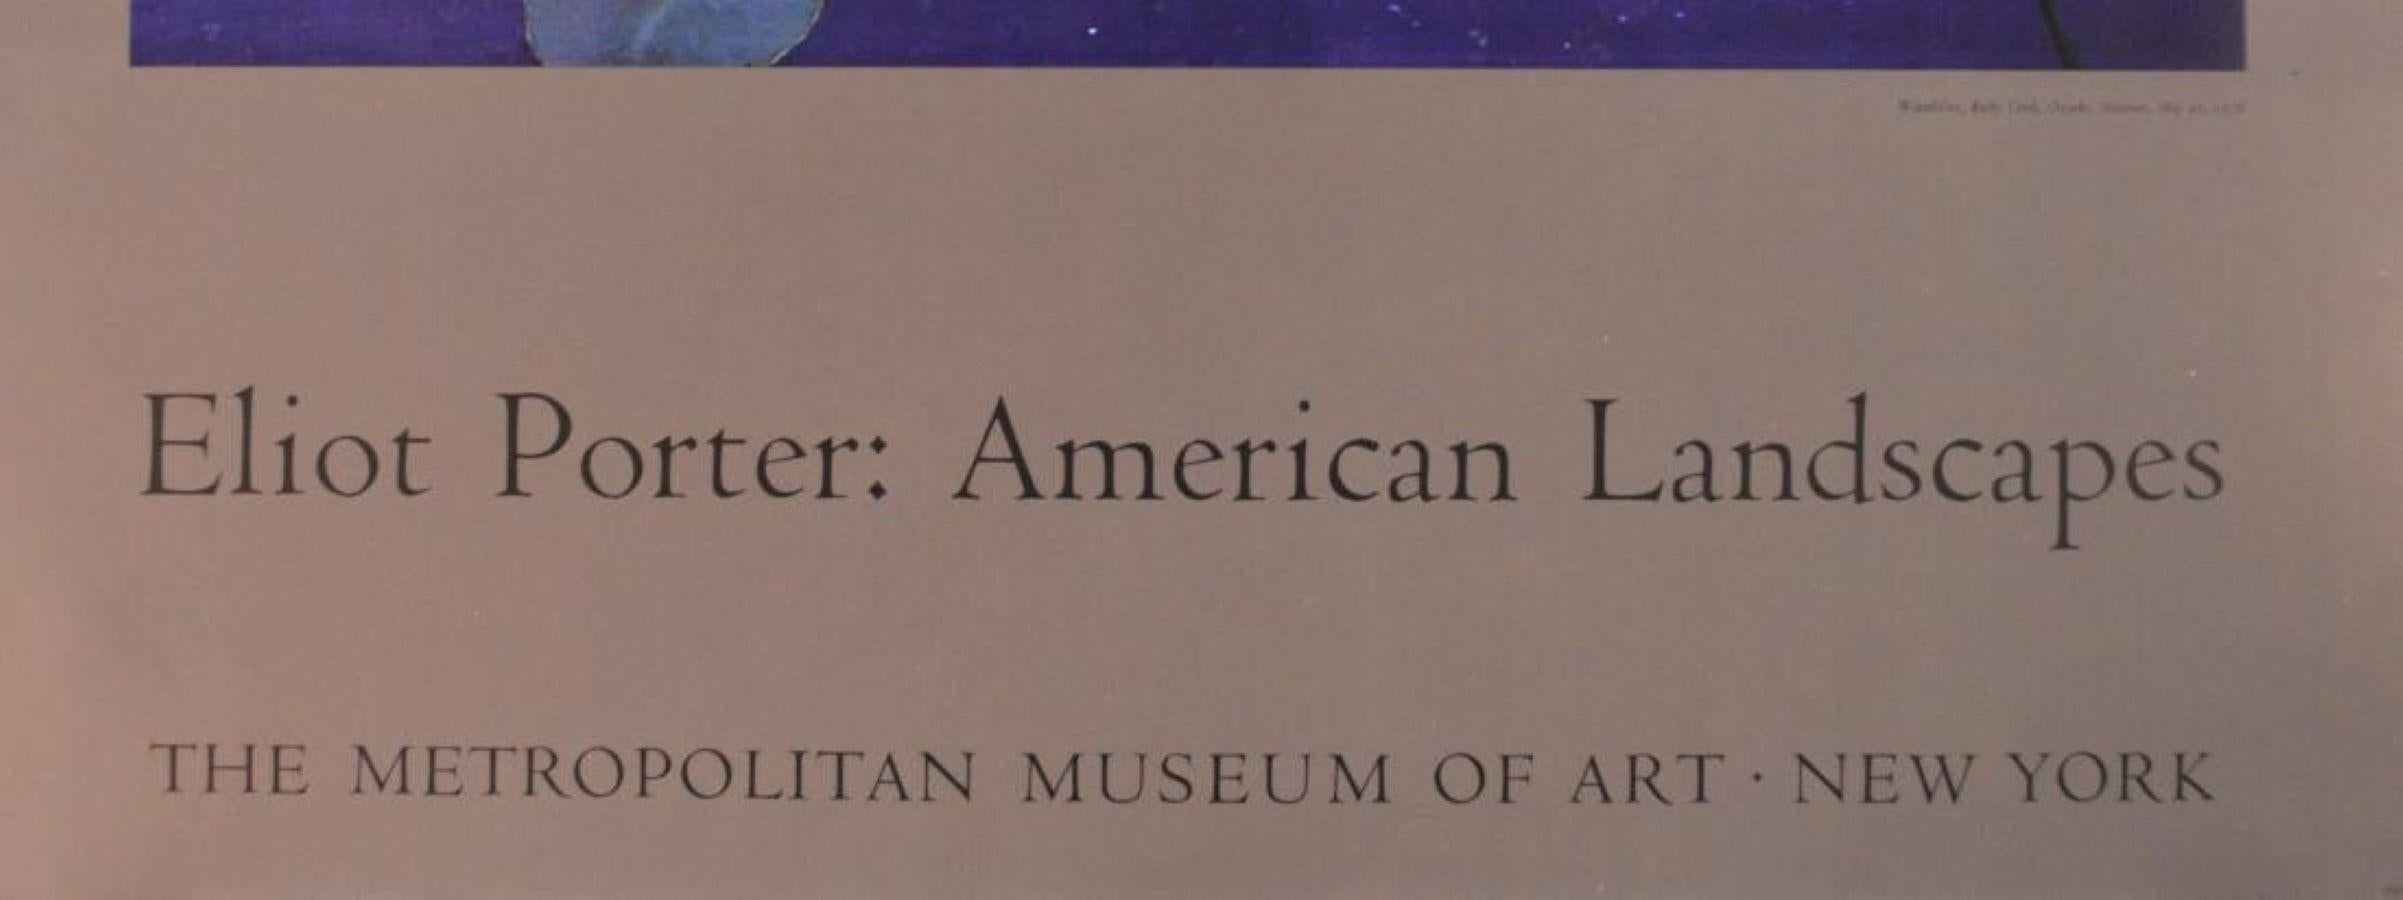 Poster-American Landscapes-Metropolitan Museum of Art, New York - Print by Eliot Porter